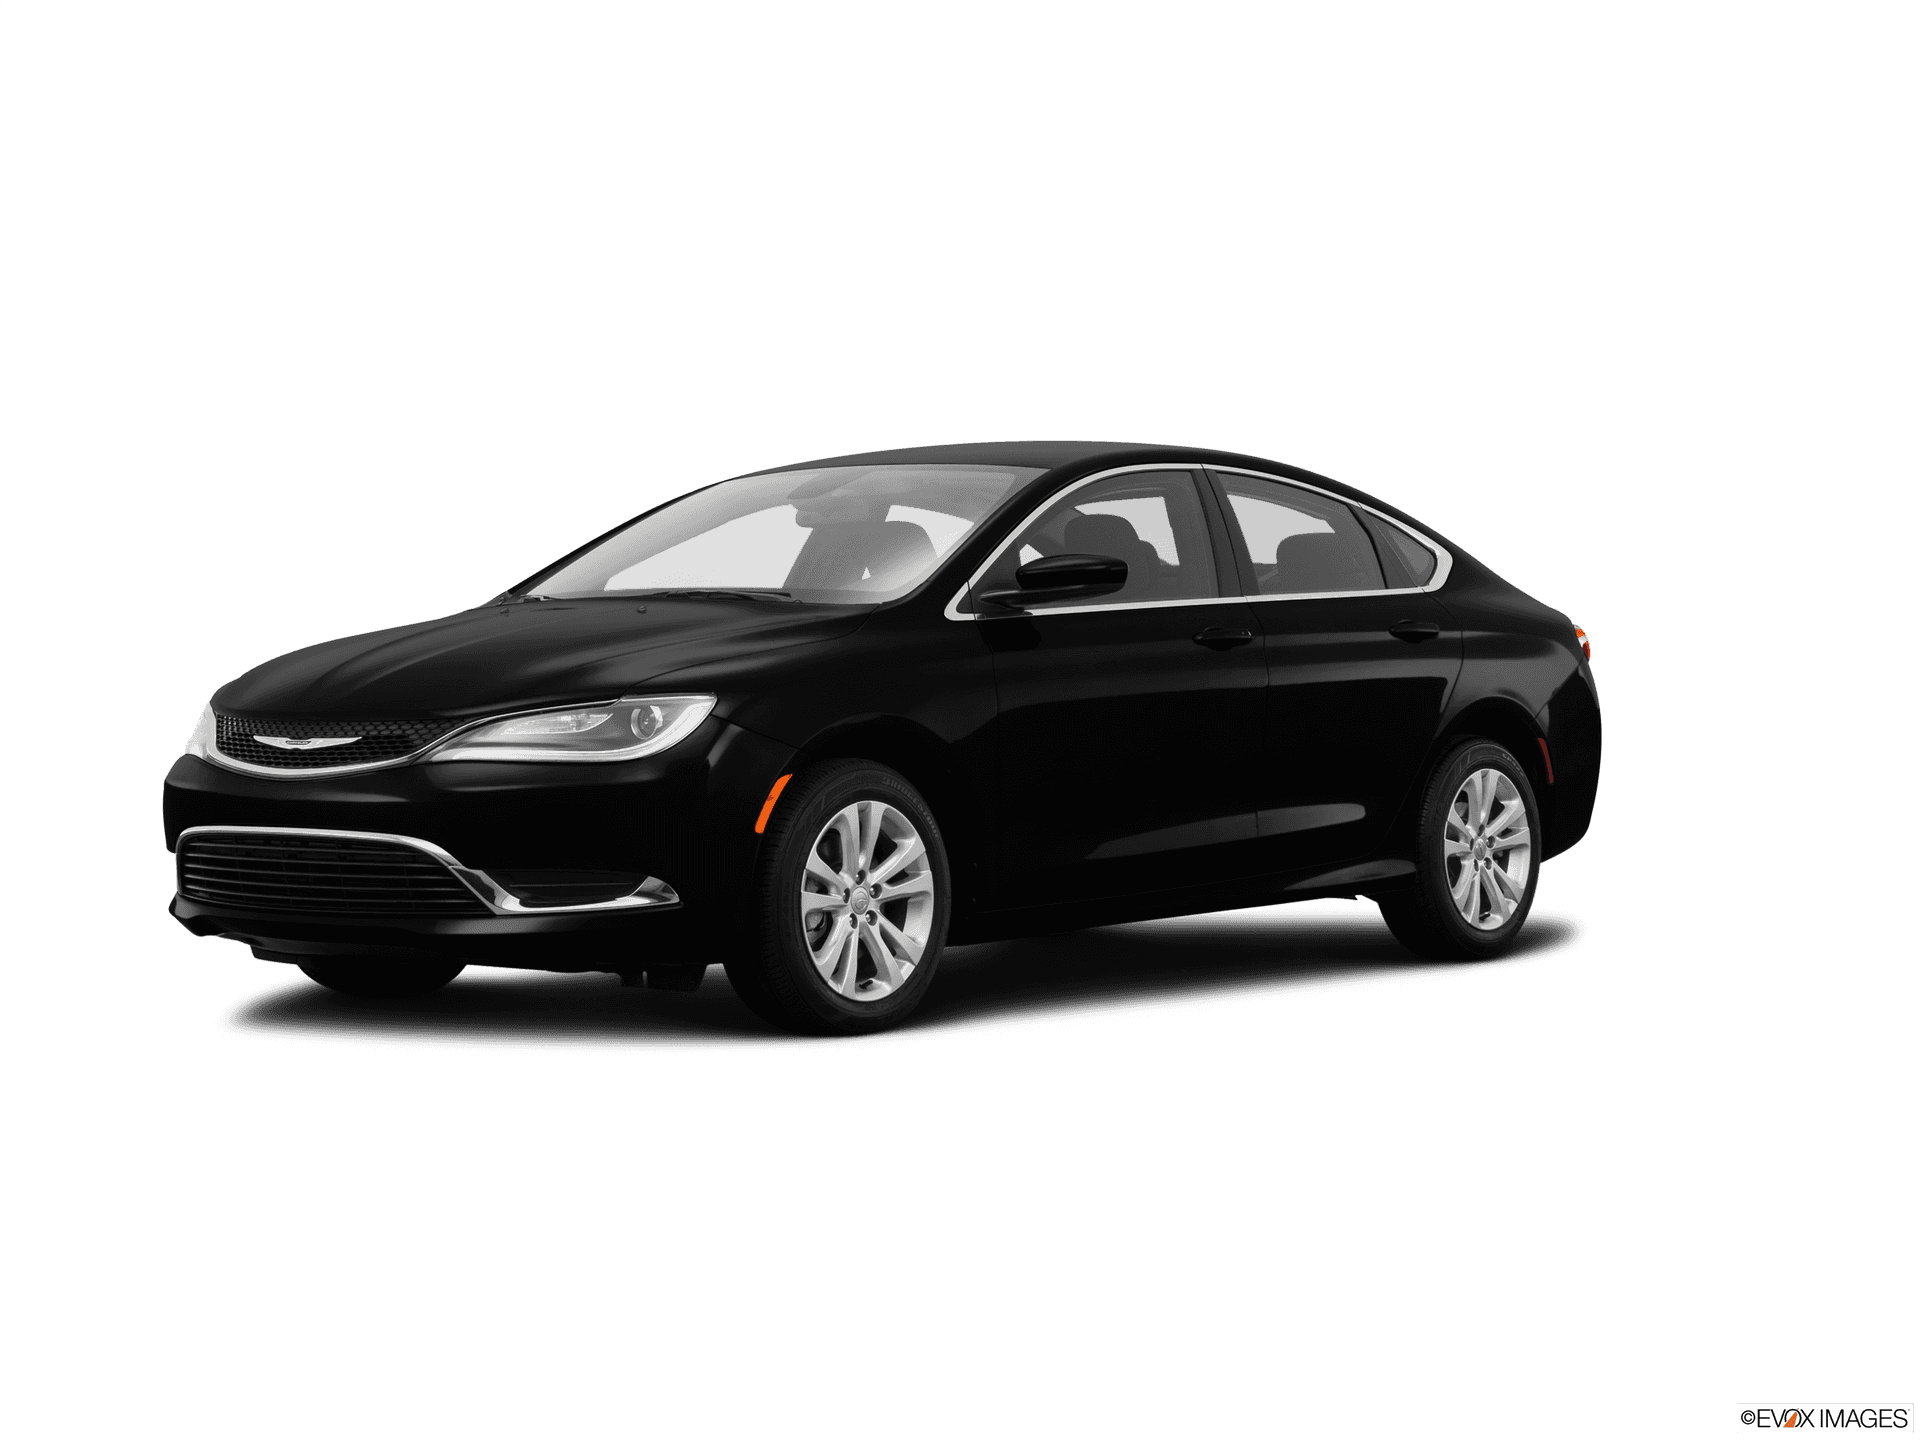 Black Chrysler Sedan Profile View PNG